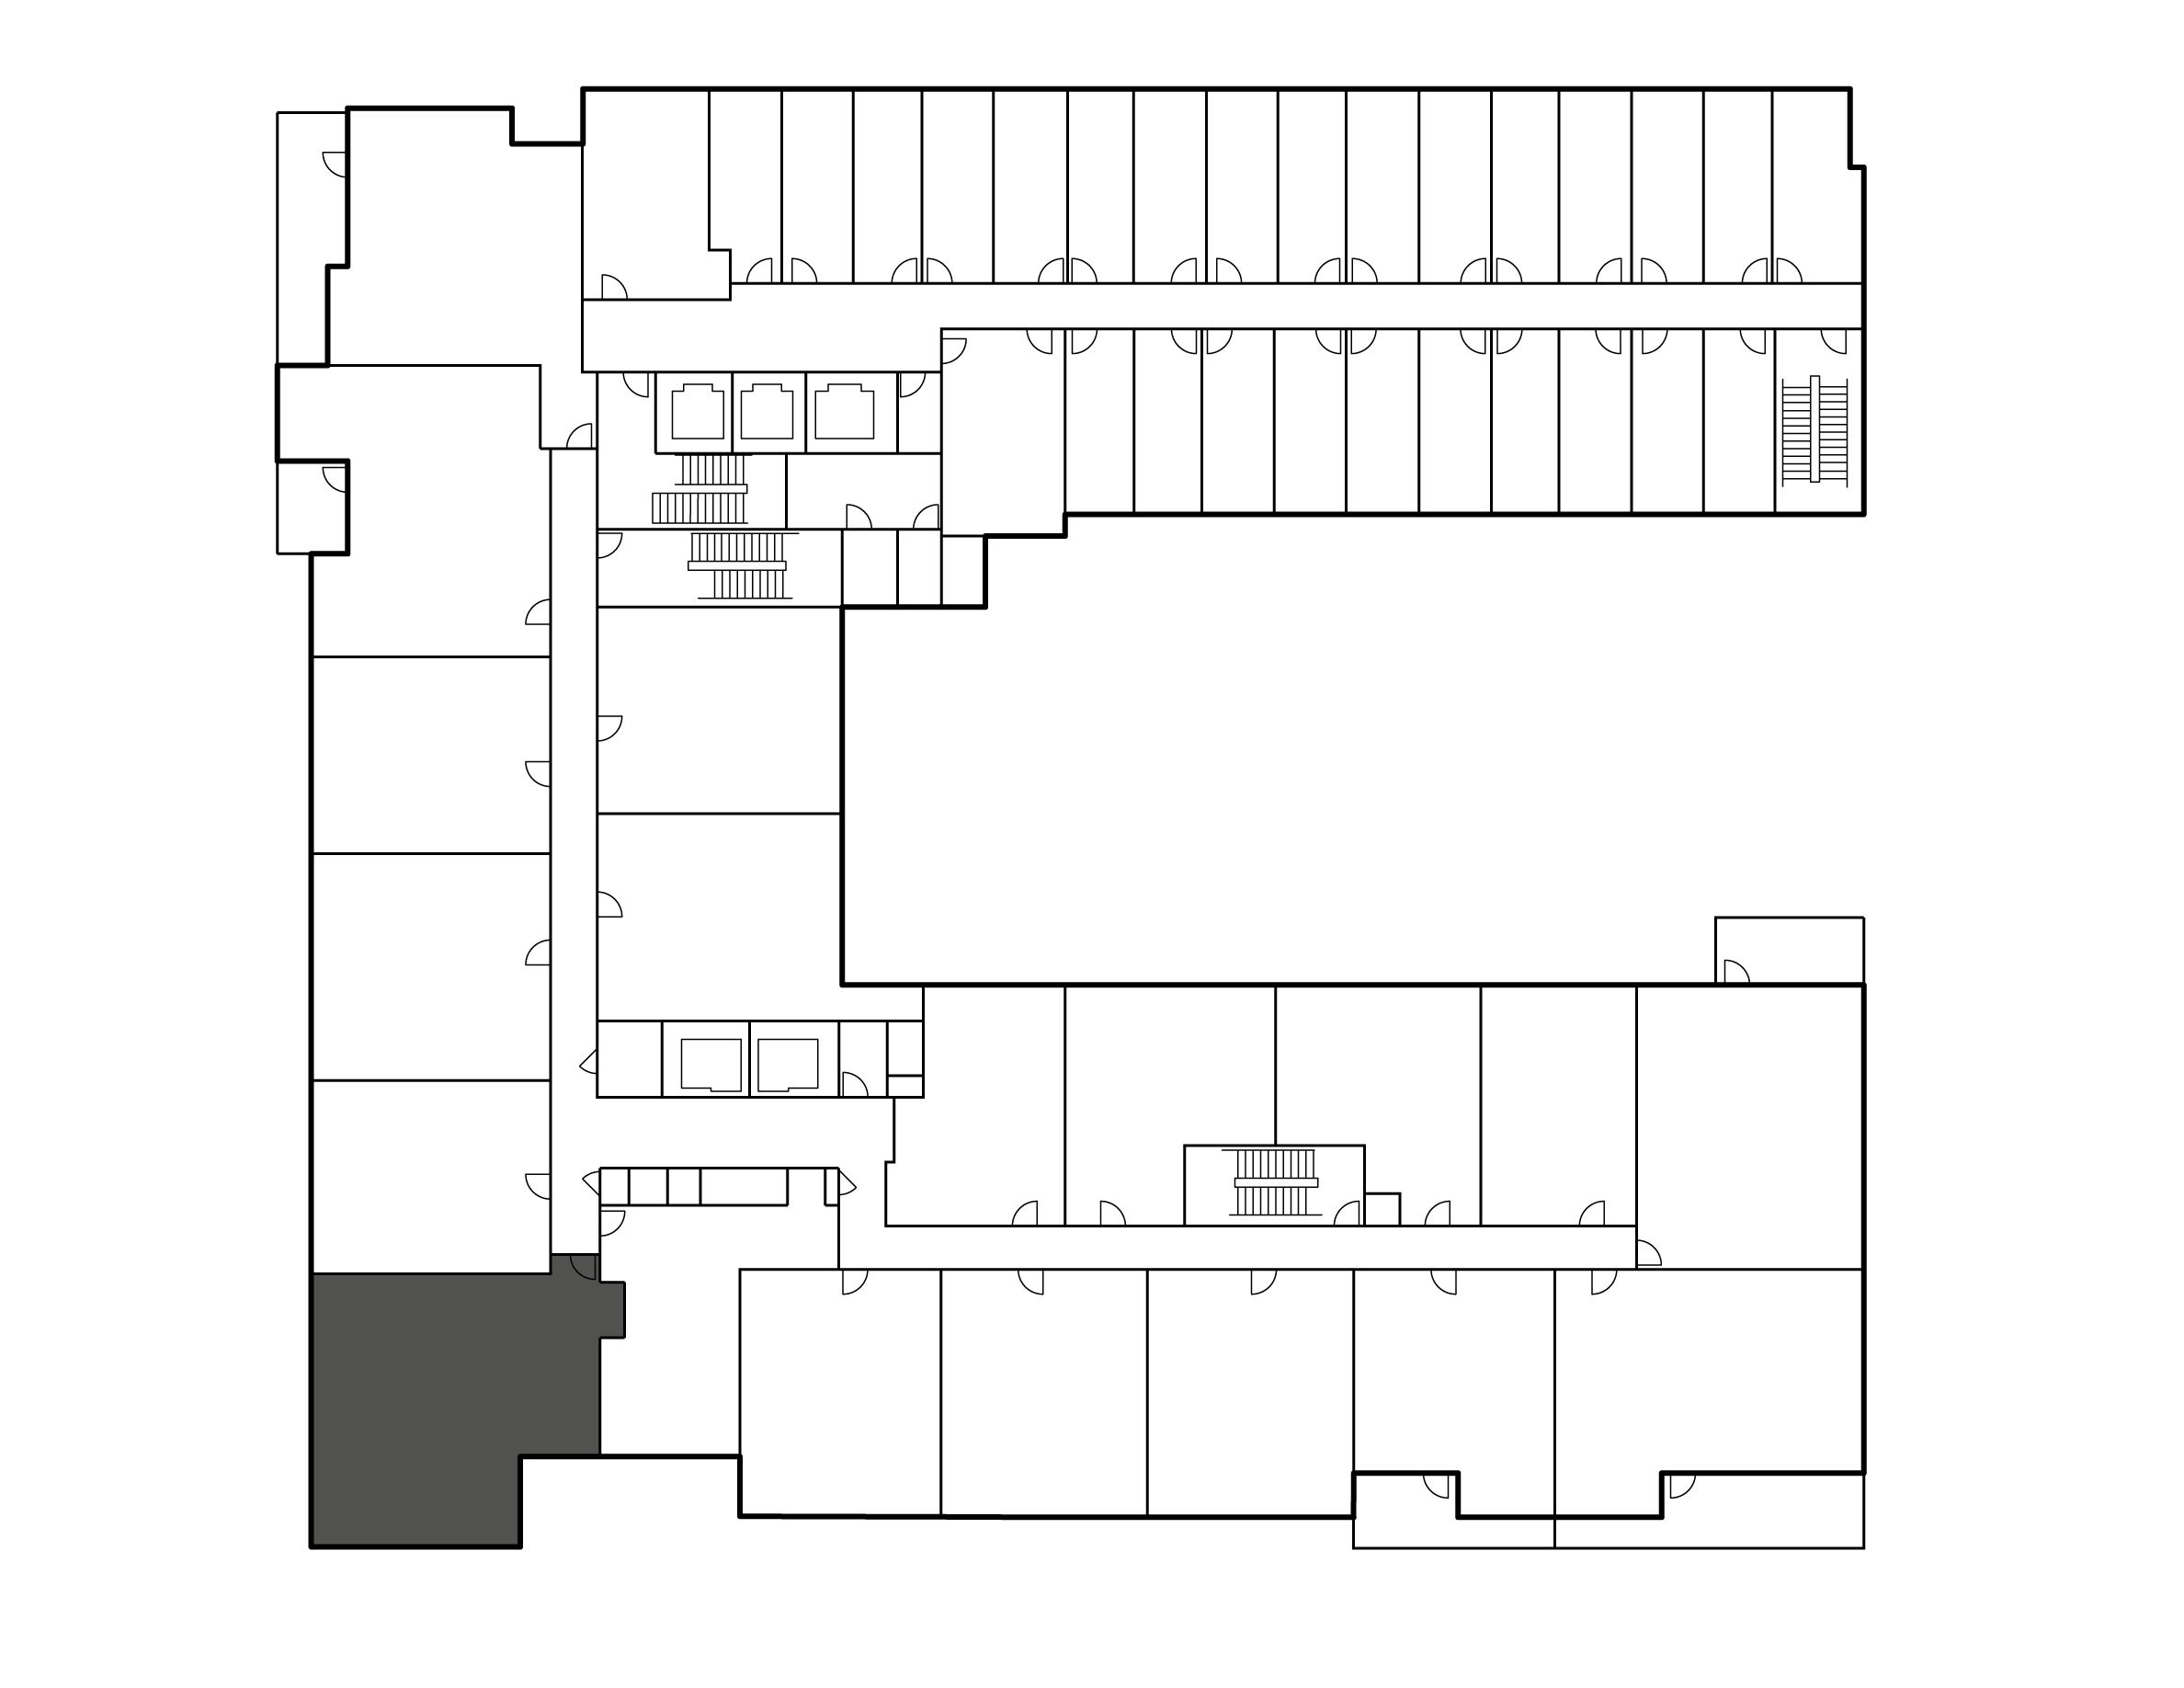 keyplan image of apartment 1009